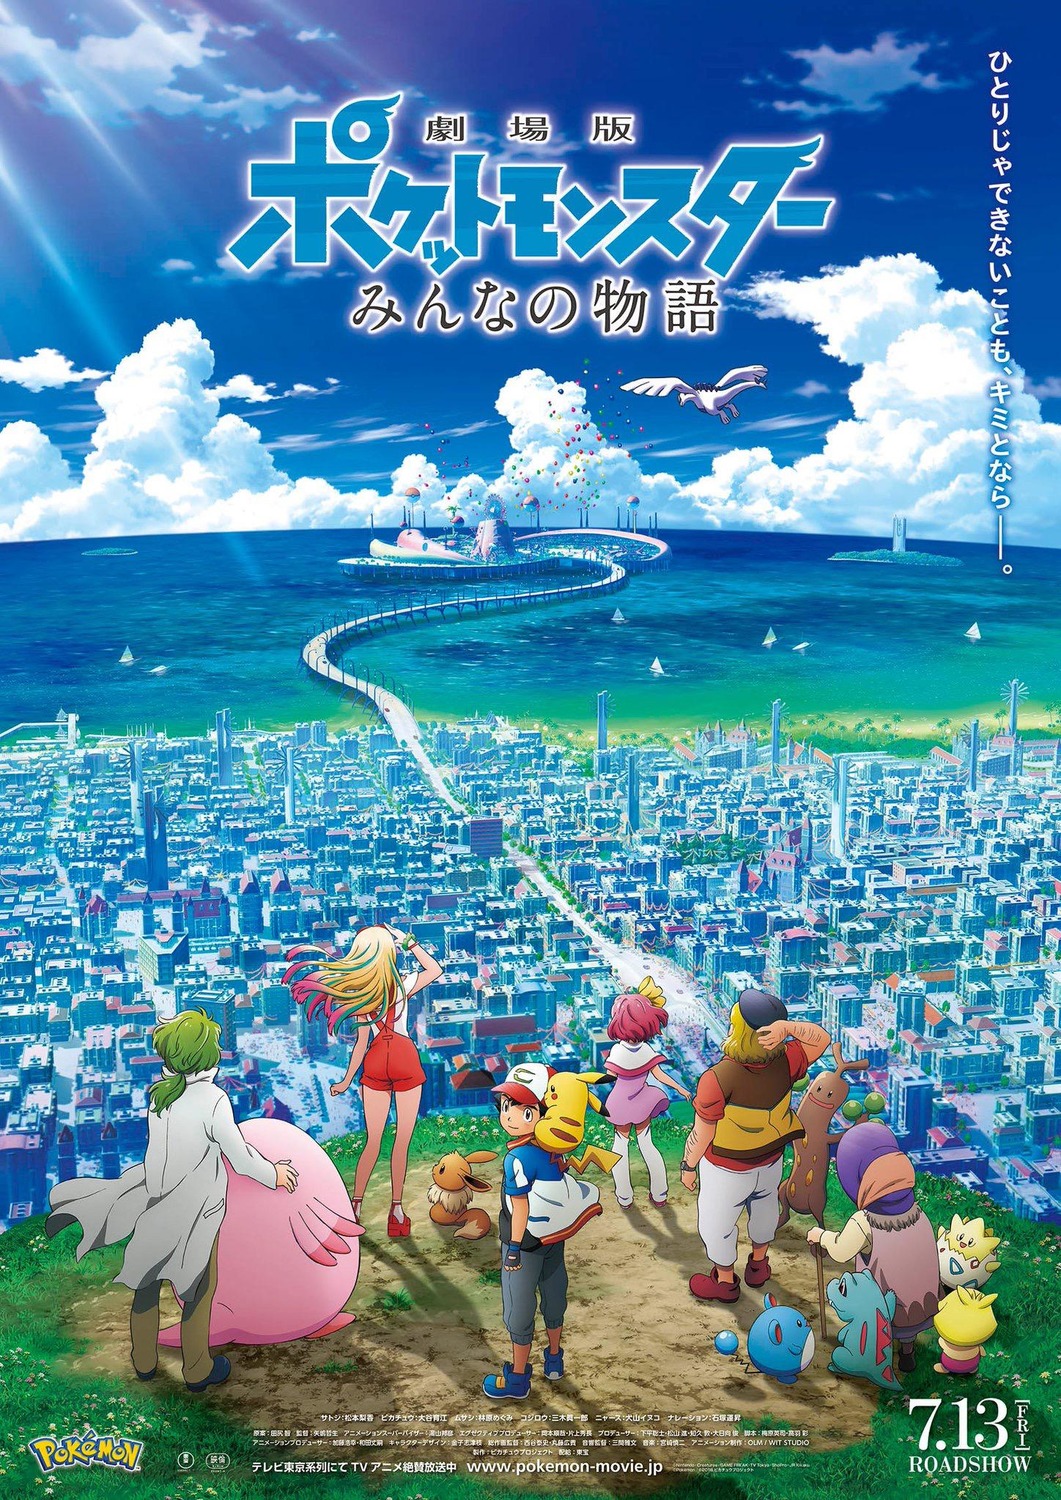 Extra Large Movie Poster Image for Gekijouban Poketto monsutâ: Minna no Monogatari (#1 of 2)